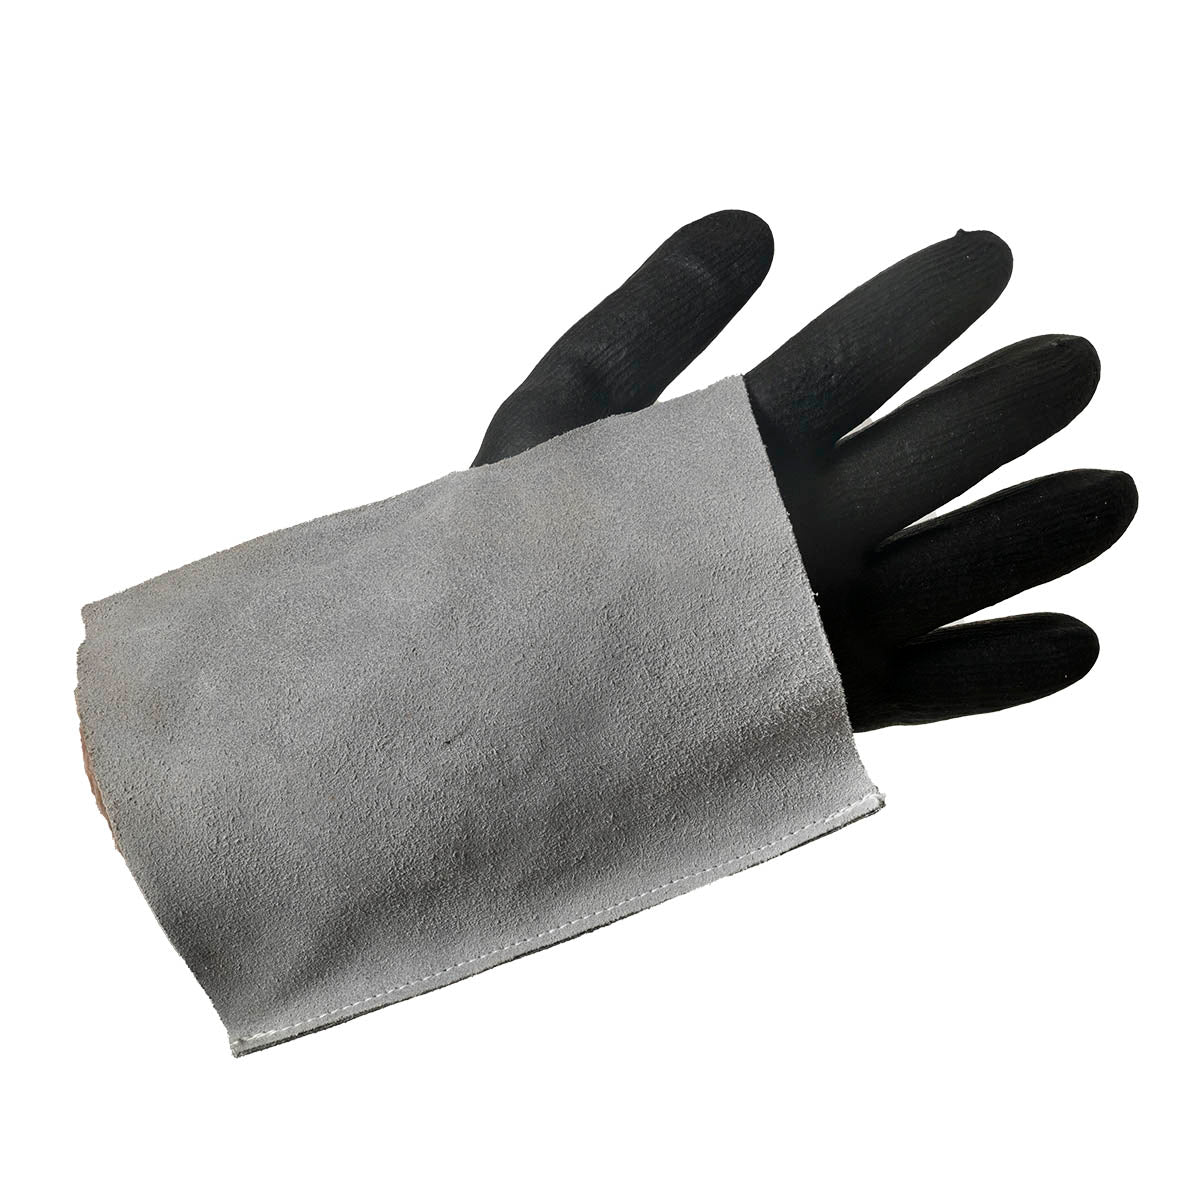 Leather Welding Gauntlet Wrist Guard